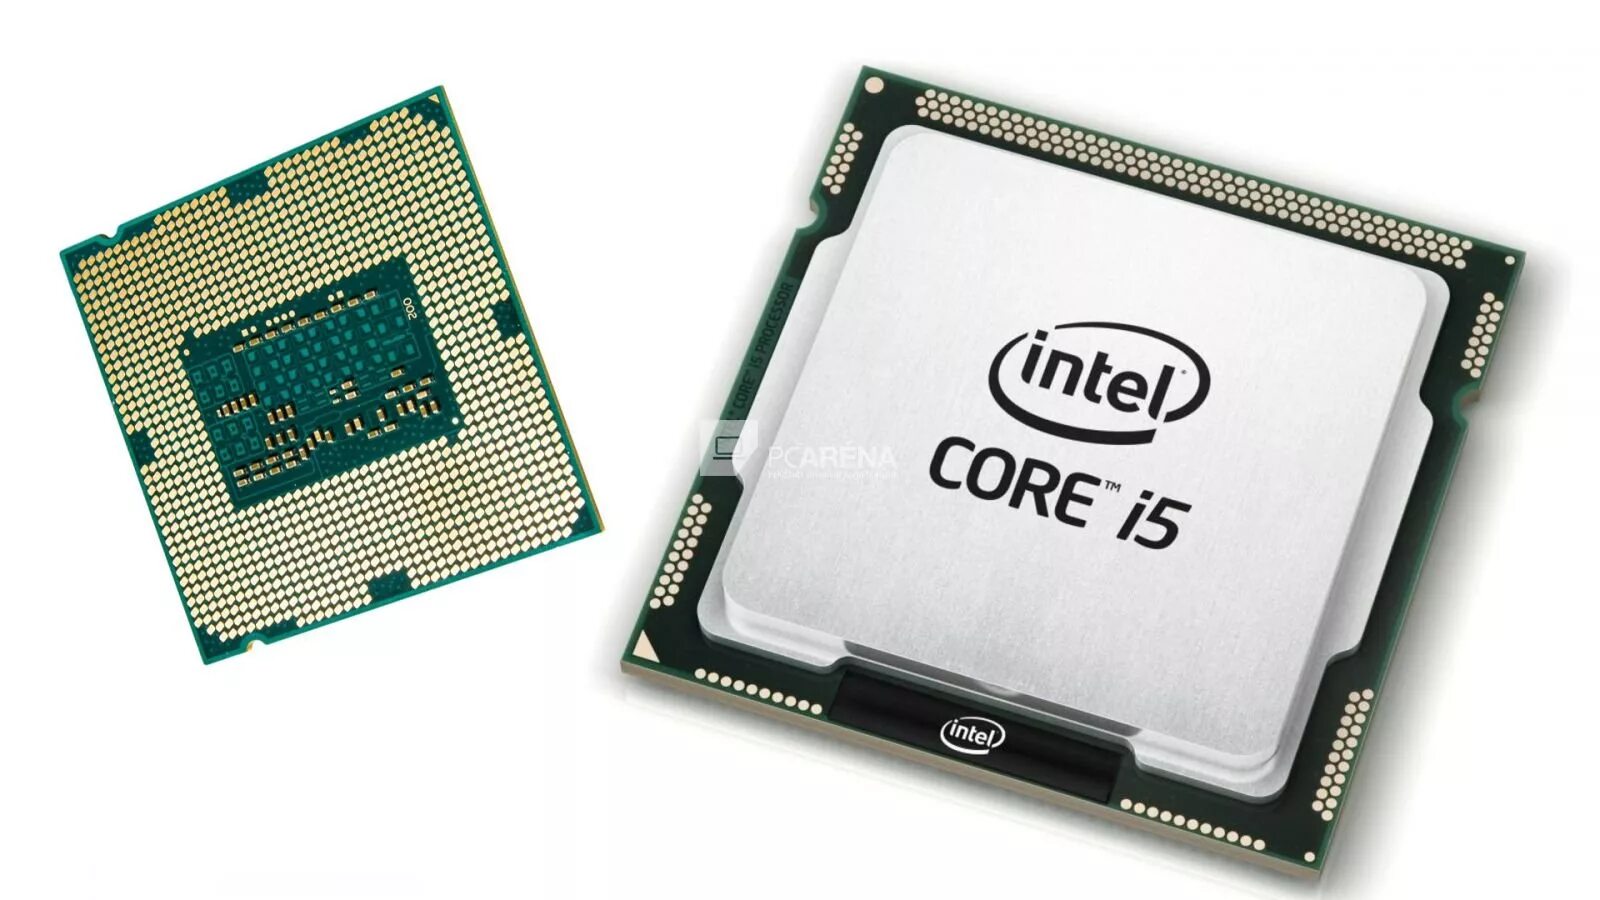 Inter core i5. Процессор Intel Core i5 2400. Процессор Intel Core i5 inside. Intel Core i5 2400 сокет. Процессор Intel Core i5 5500.